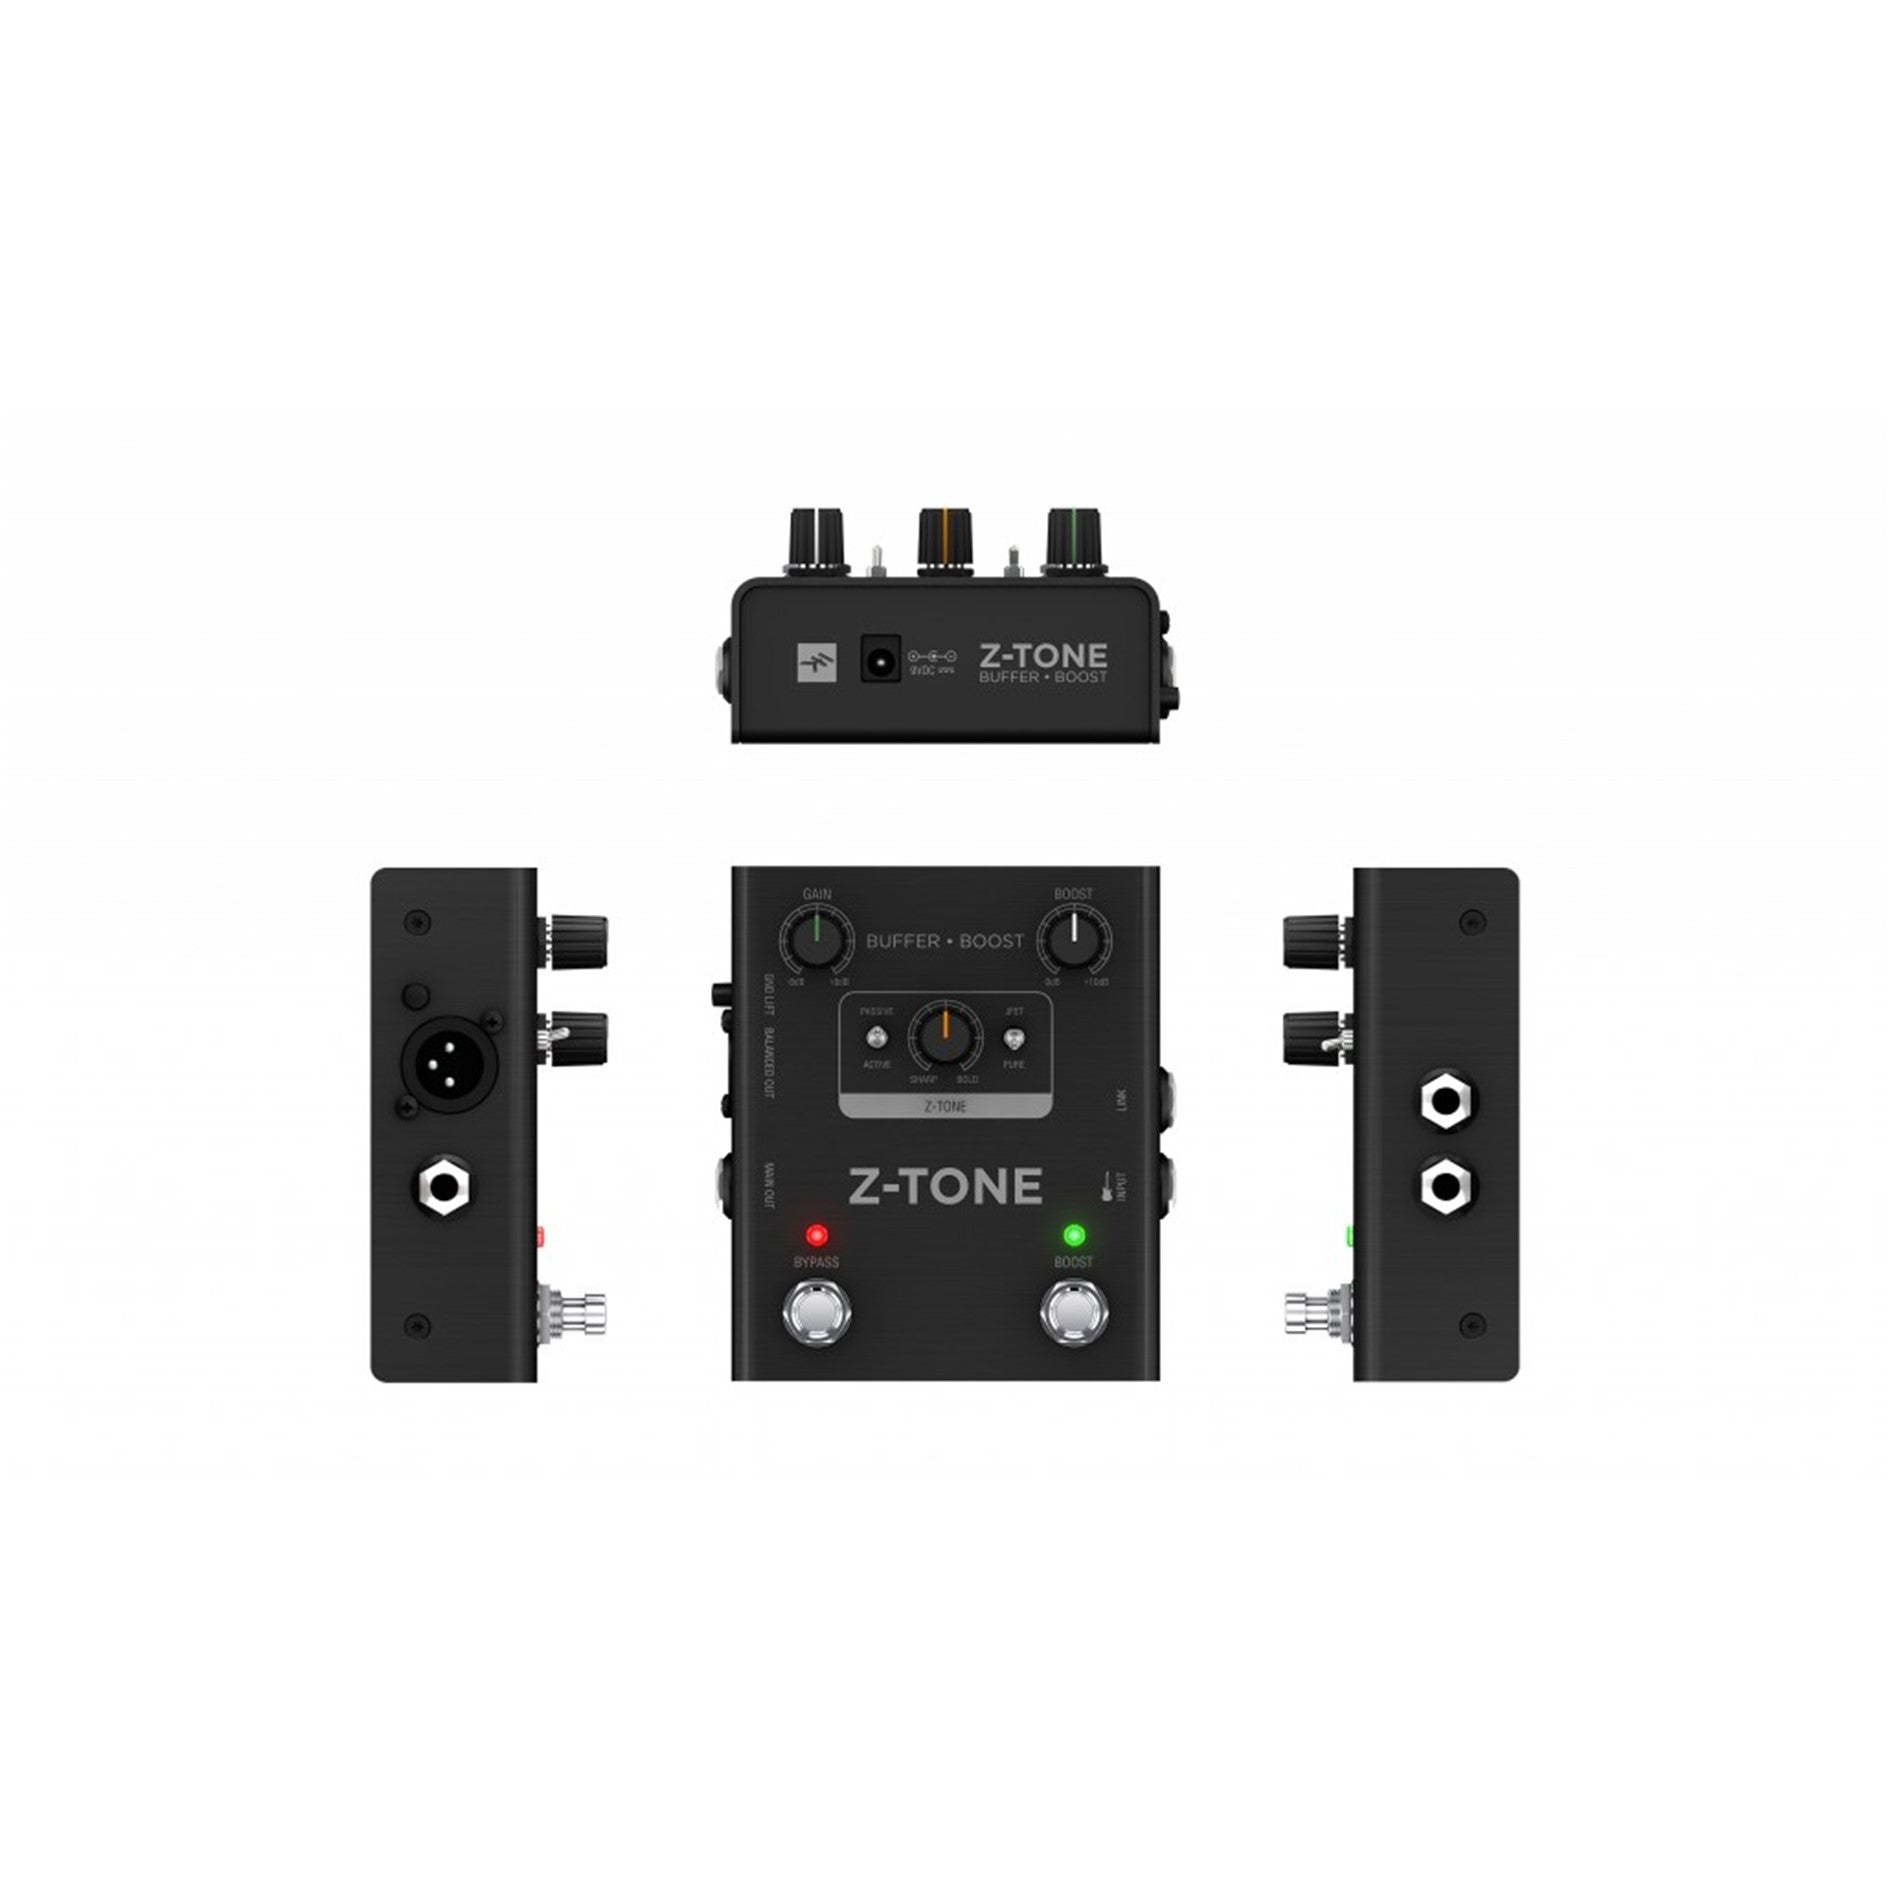 IK Multimedia Z-TONE Buffer Boost - Preamp/DI Pedal with Advanced Tone Shaping